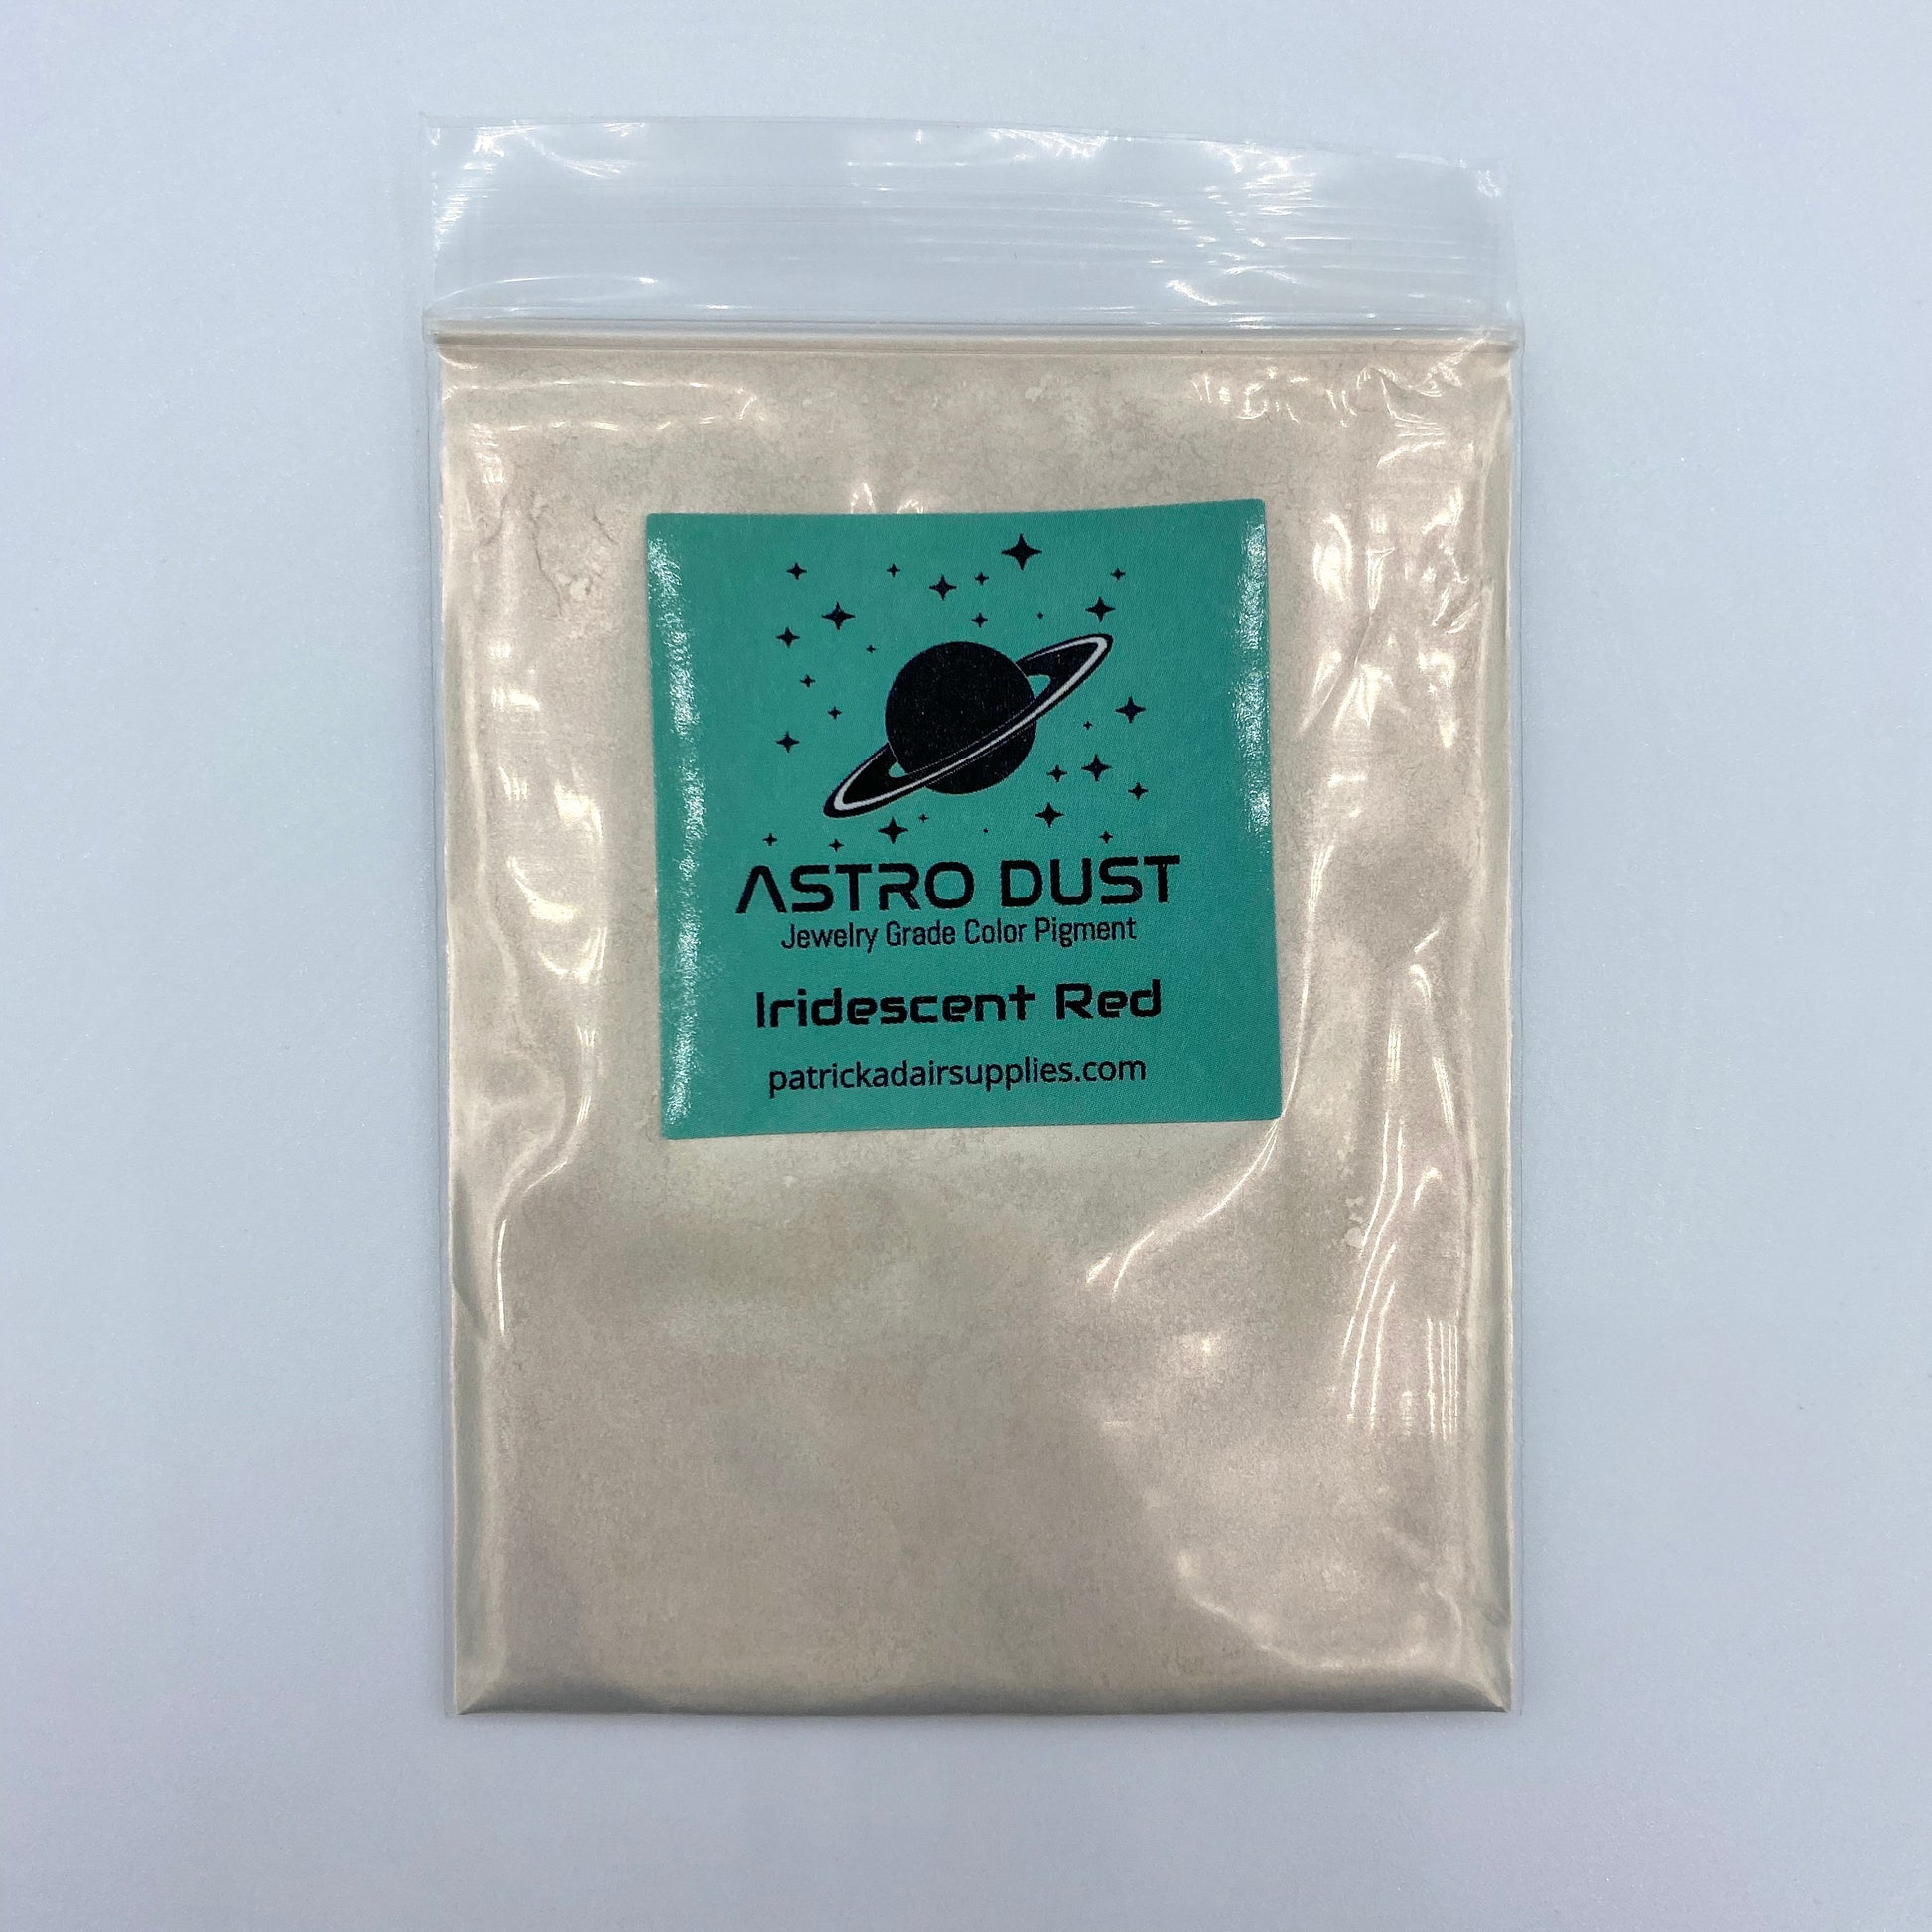 Astro Dust Iridescent Red Color Pigment - Patrick Adair Supplies